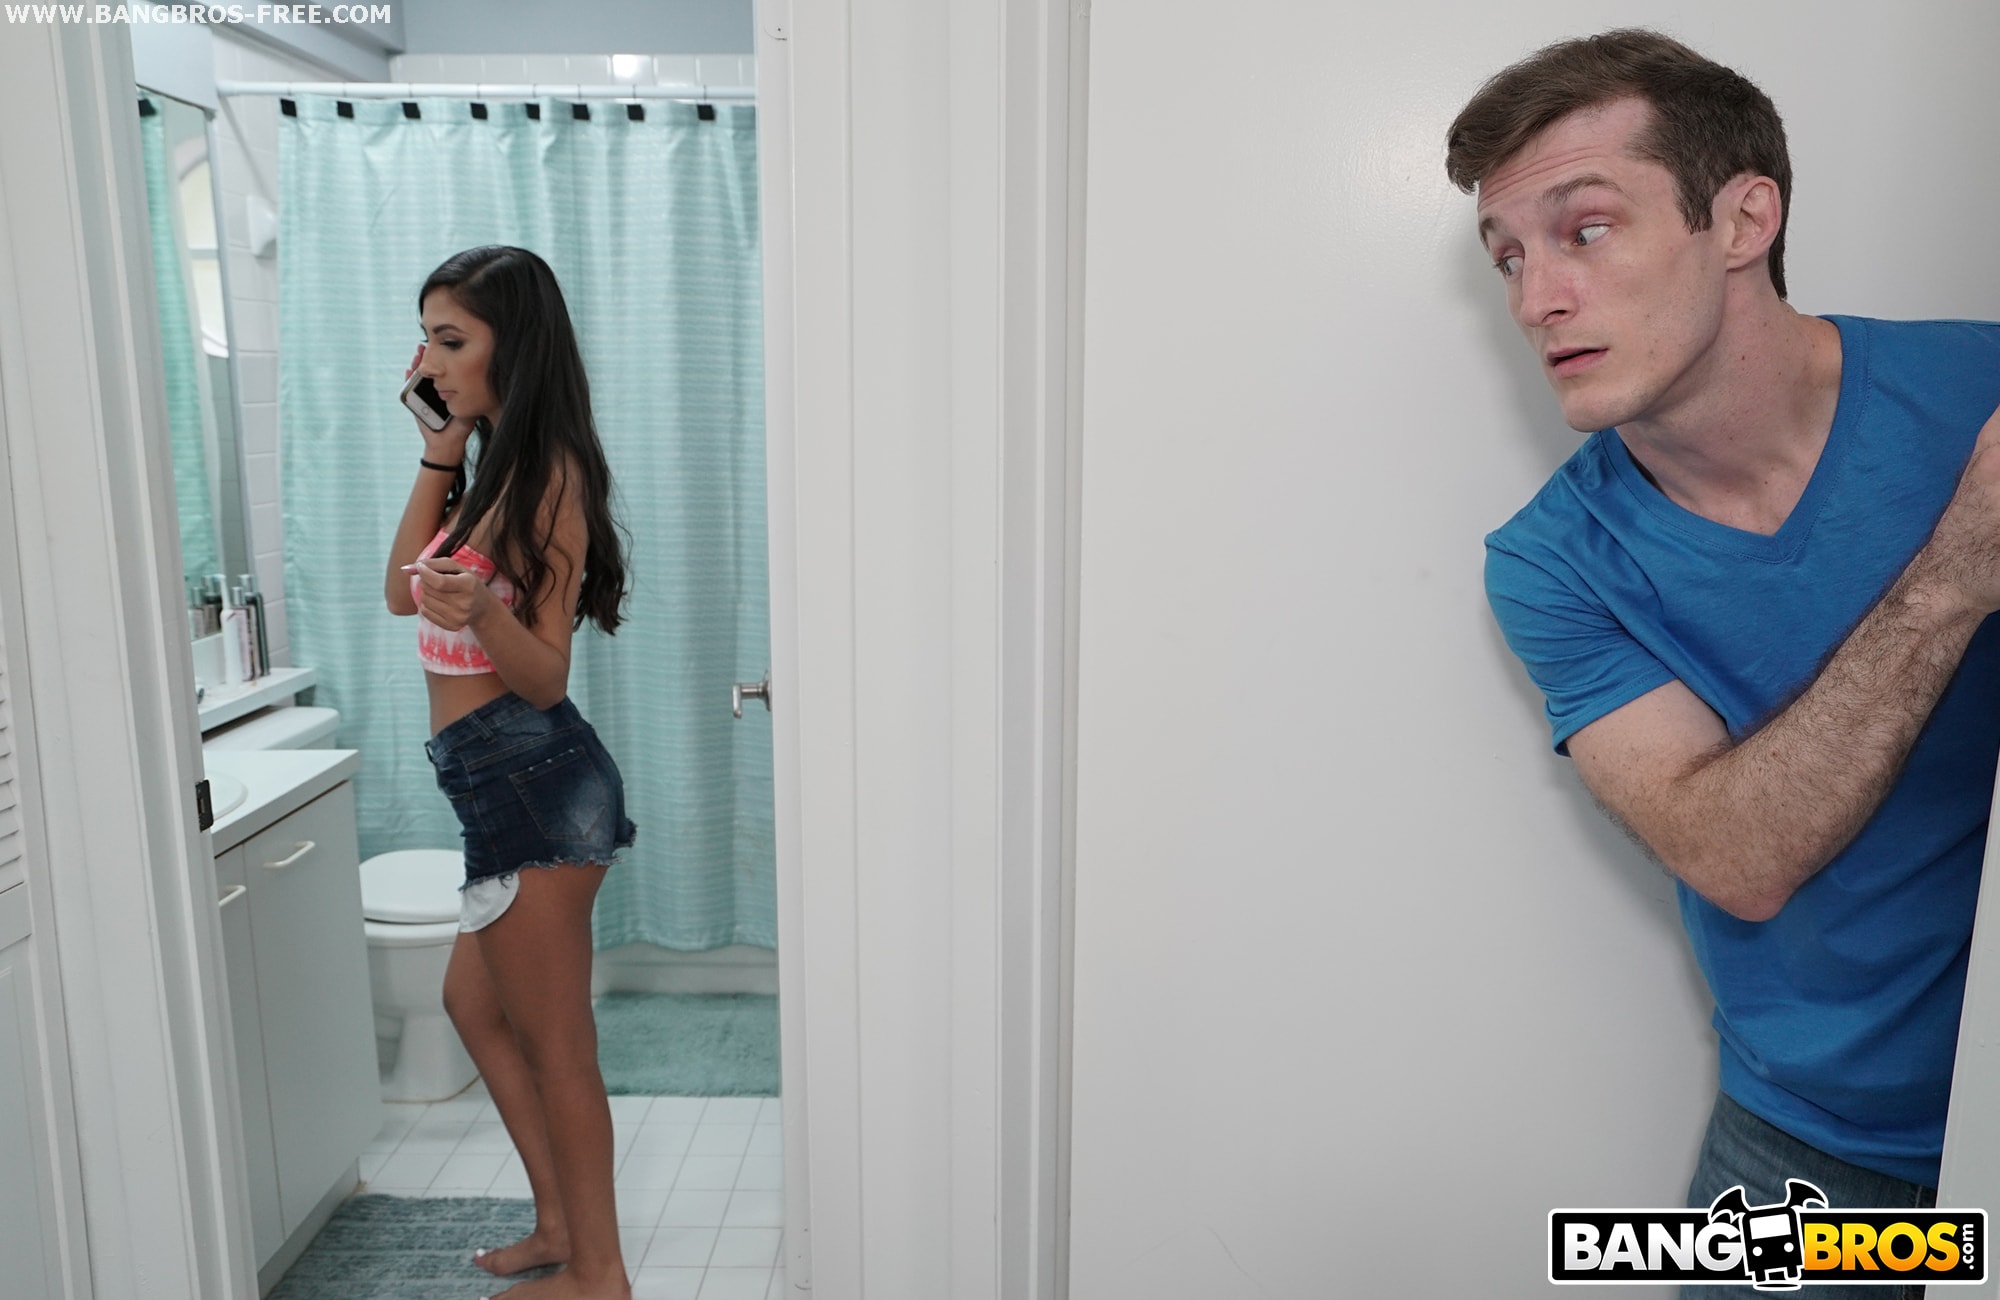 Bangbros 'Perv Roommate Gets Fucked' starring Gianna Dior (Photo 1)